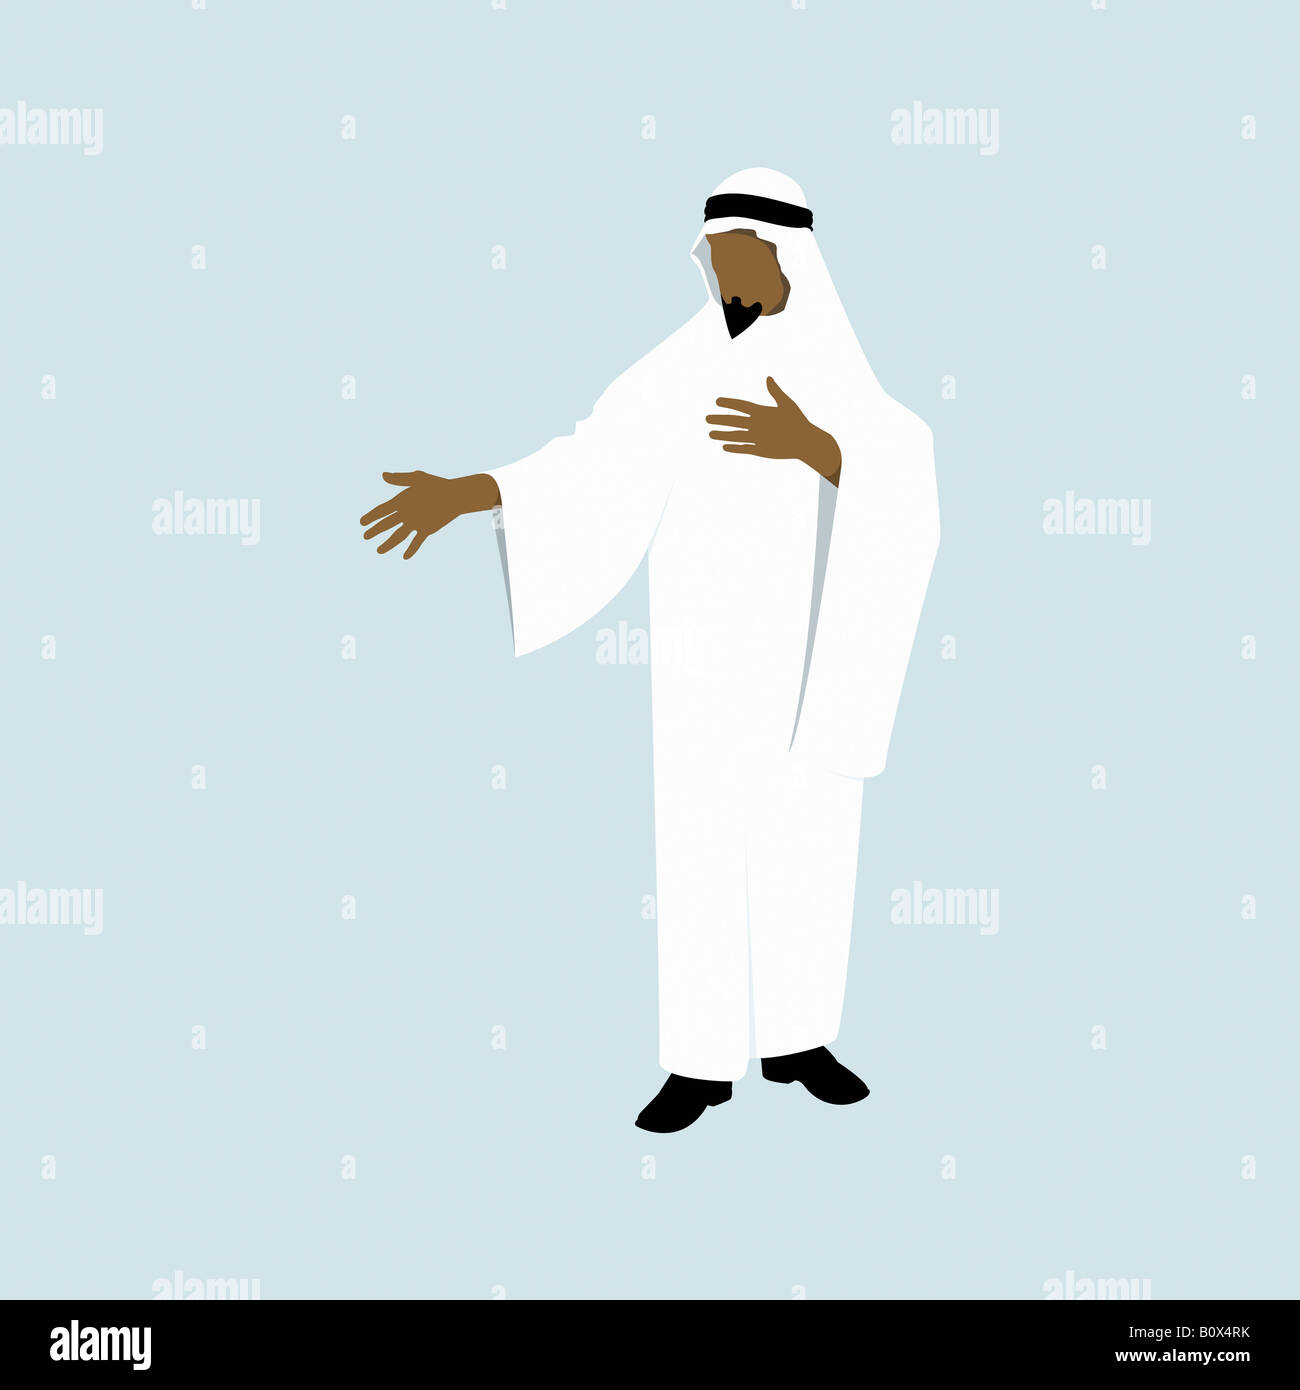 A stereotypical Saudi Arabian man Stock Photo